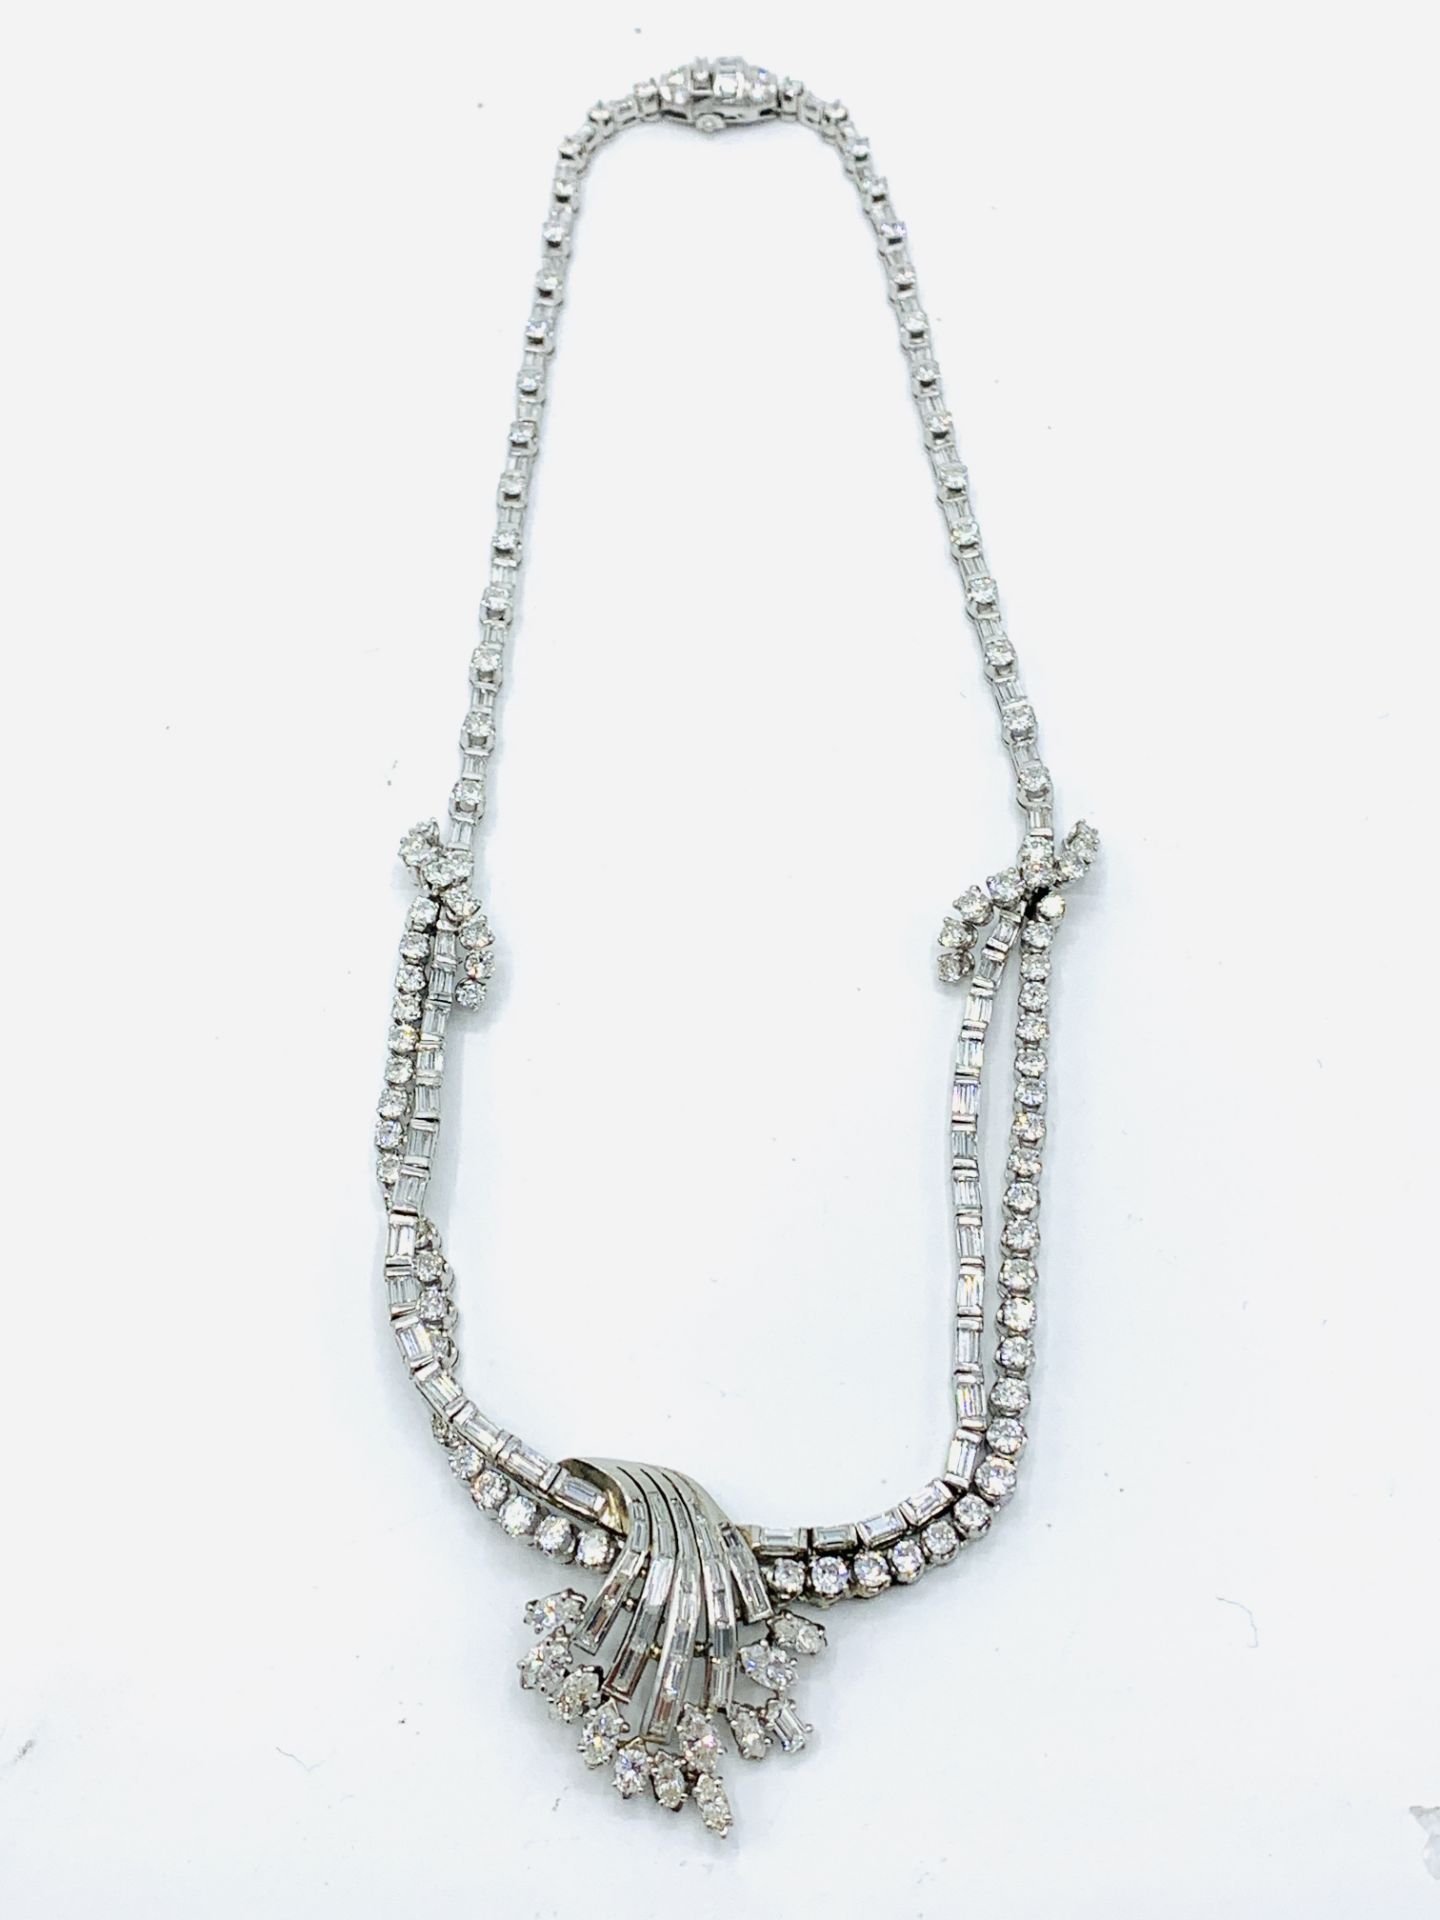 White gold diamond necklace - Image 2 of 10